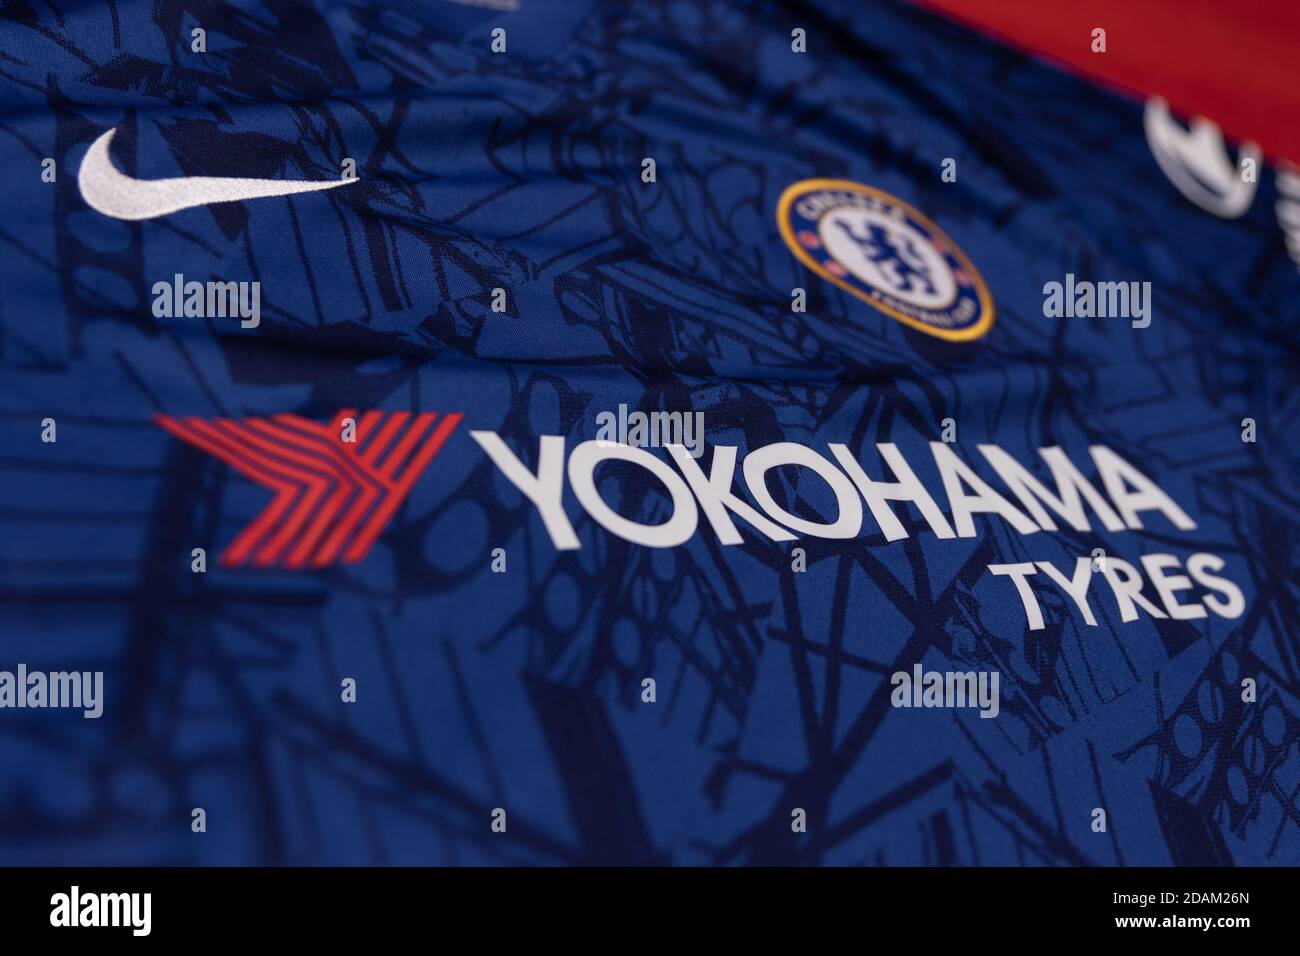 Chelsea FC – Maillot Nike Home 2019/2020 pour Femme avec pneus Yokohama  avant du sponsor du maillot Photo Stock - Alamy